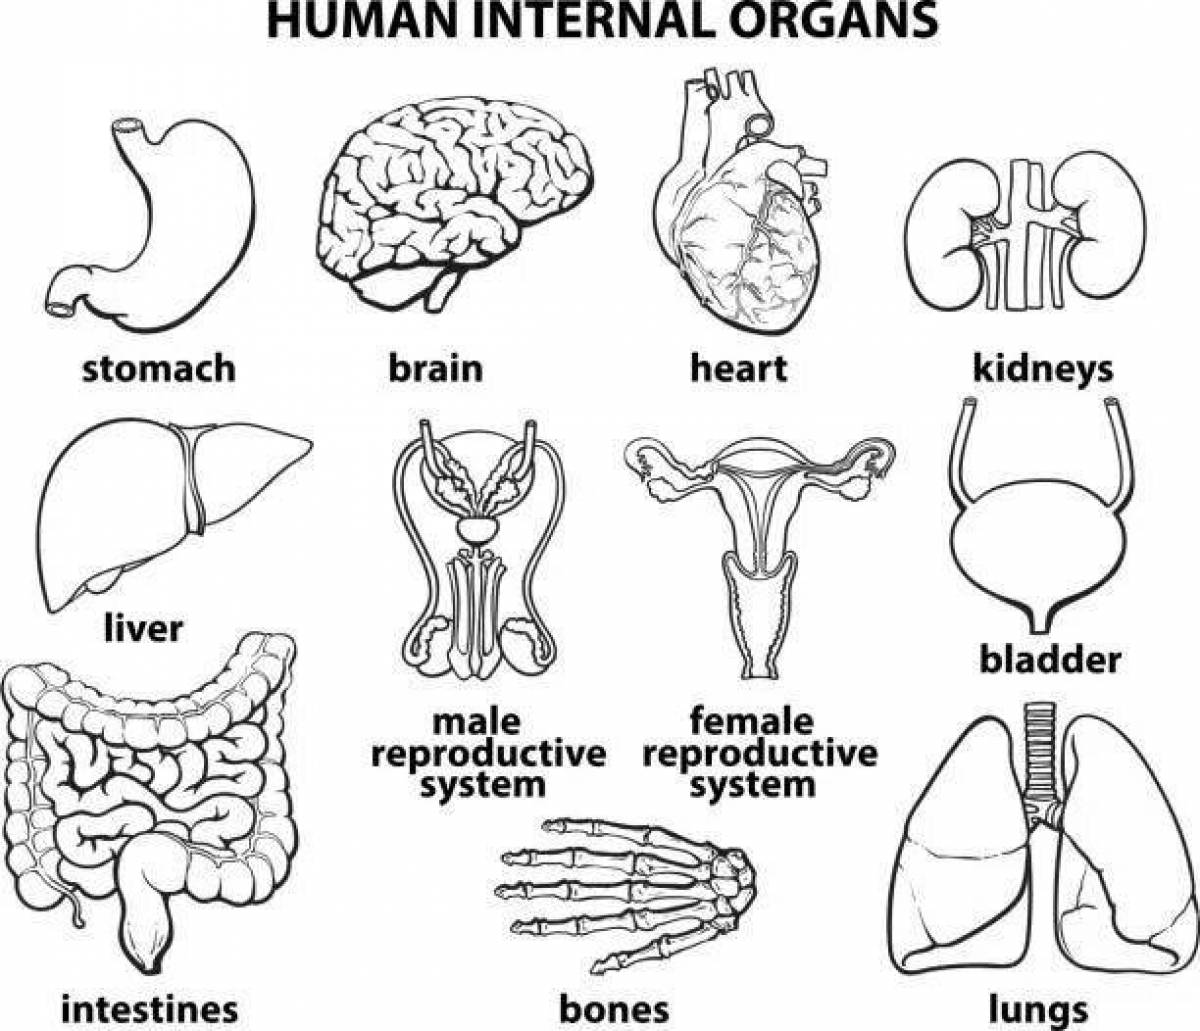 Coloring book of human internal organs for preschoolers